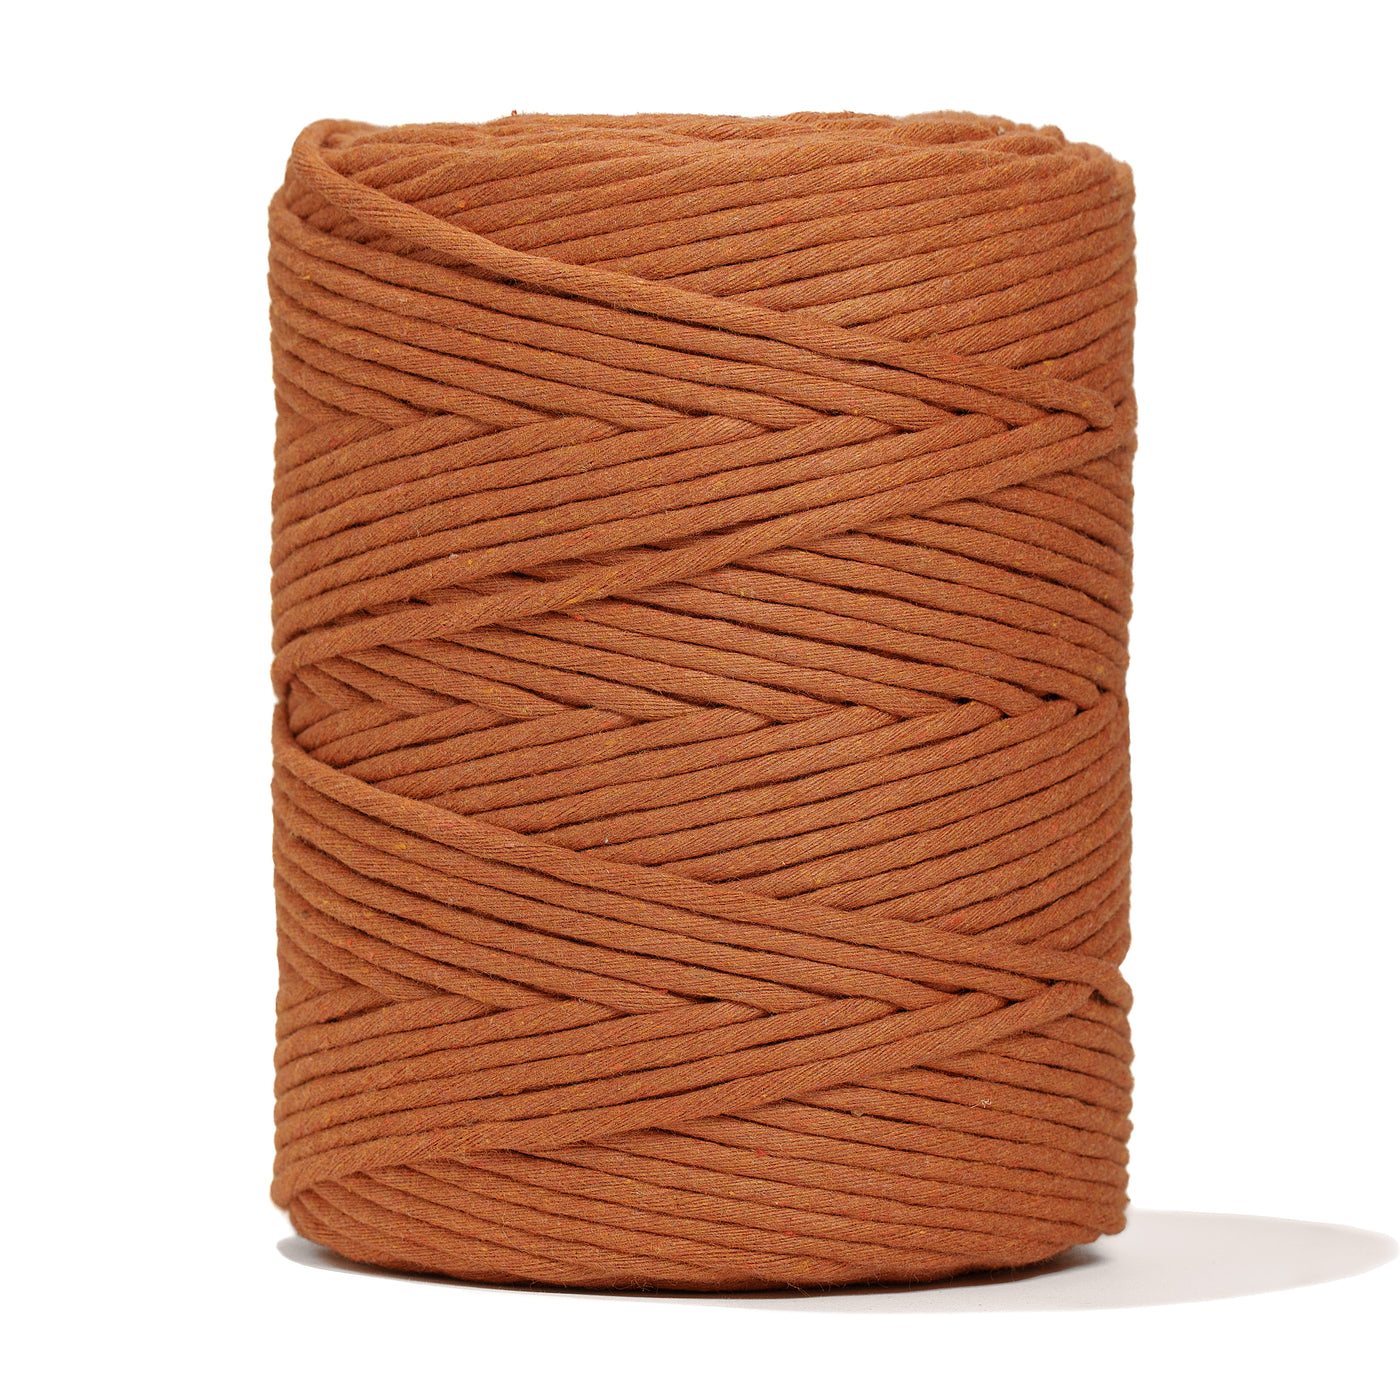 5mm Single Strand Cotton Macrame Cord - Natural